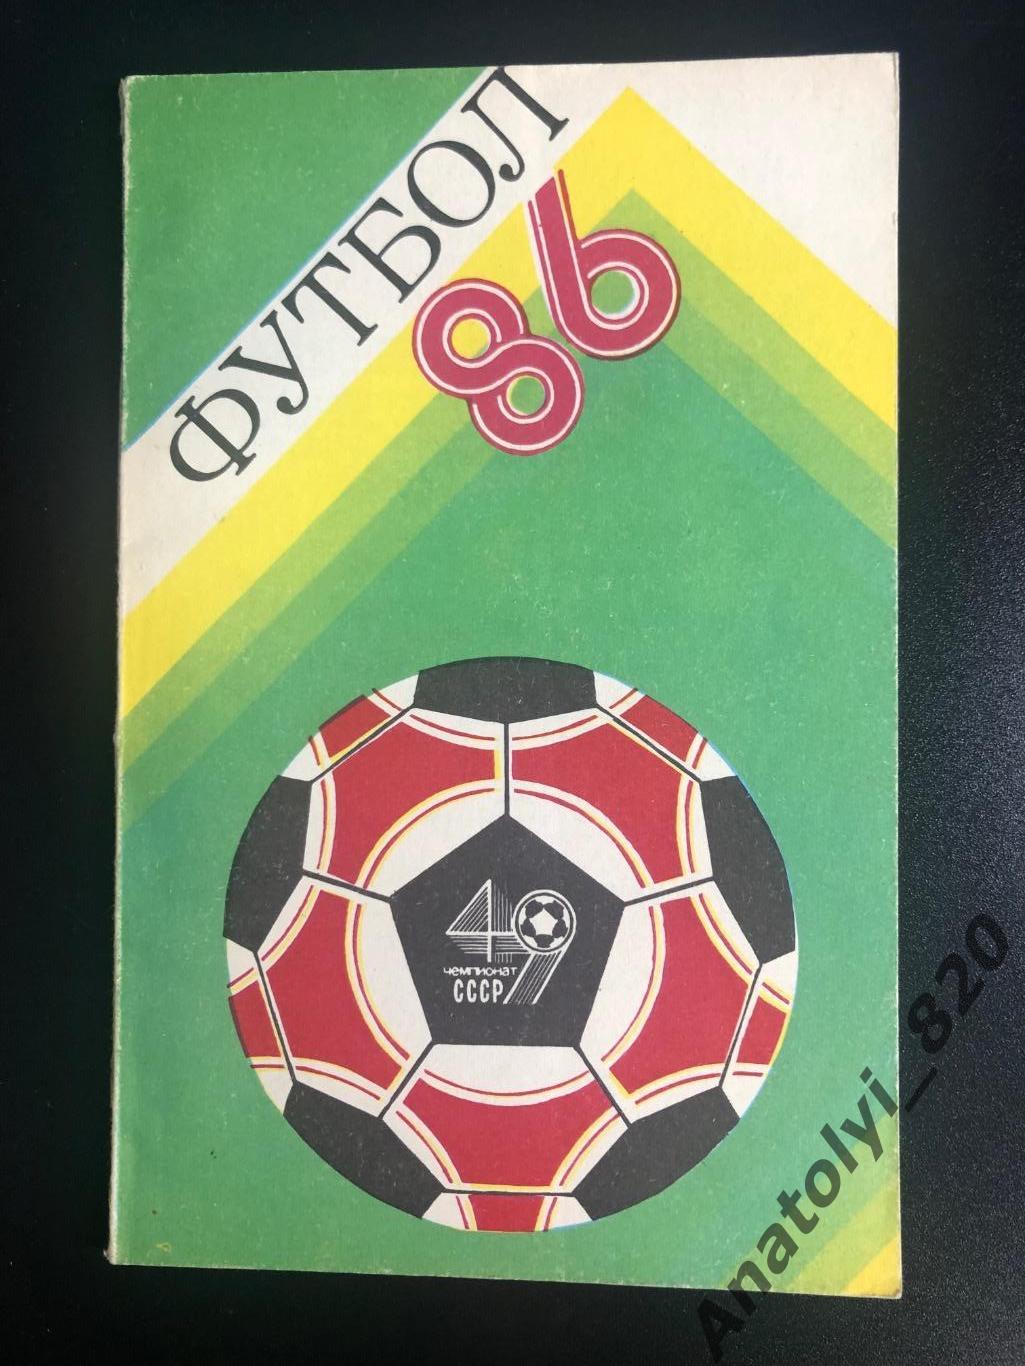 Ташкент 1986 год календарь - справочник